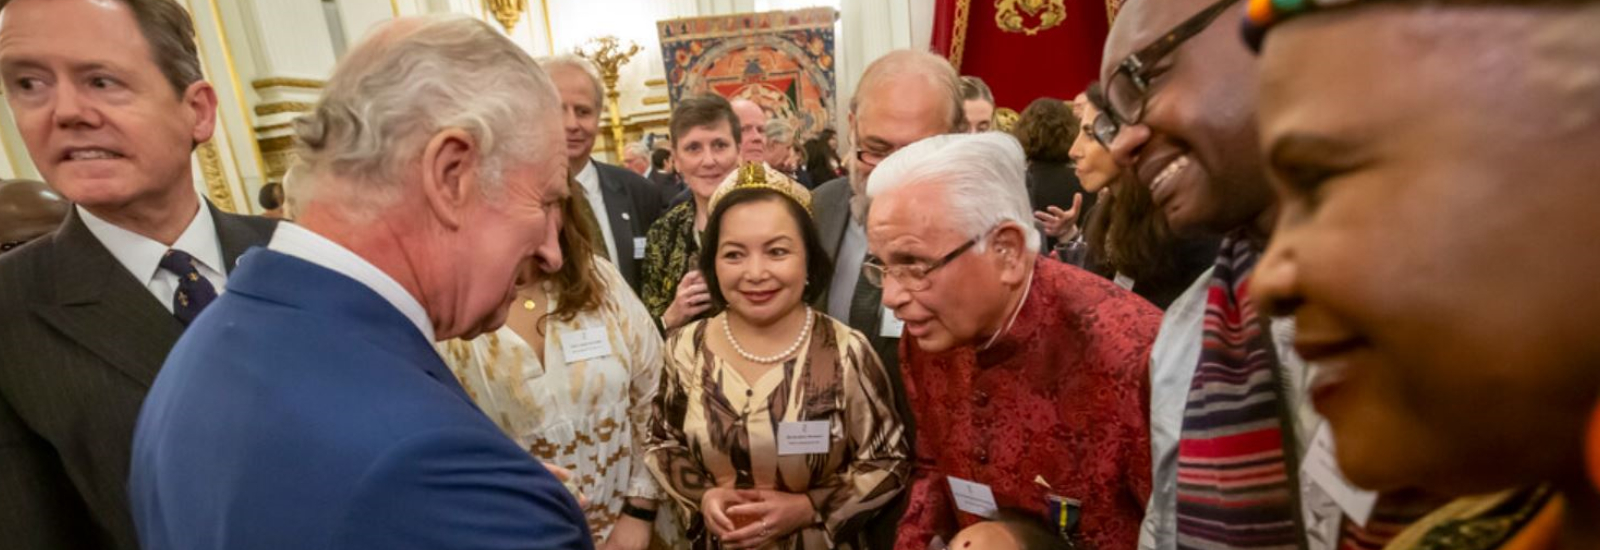 King Charles III meeting the community members at Buckingham palace